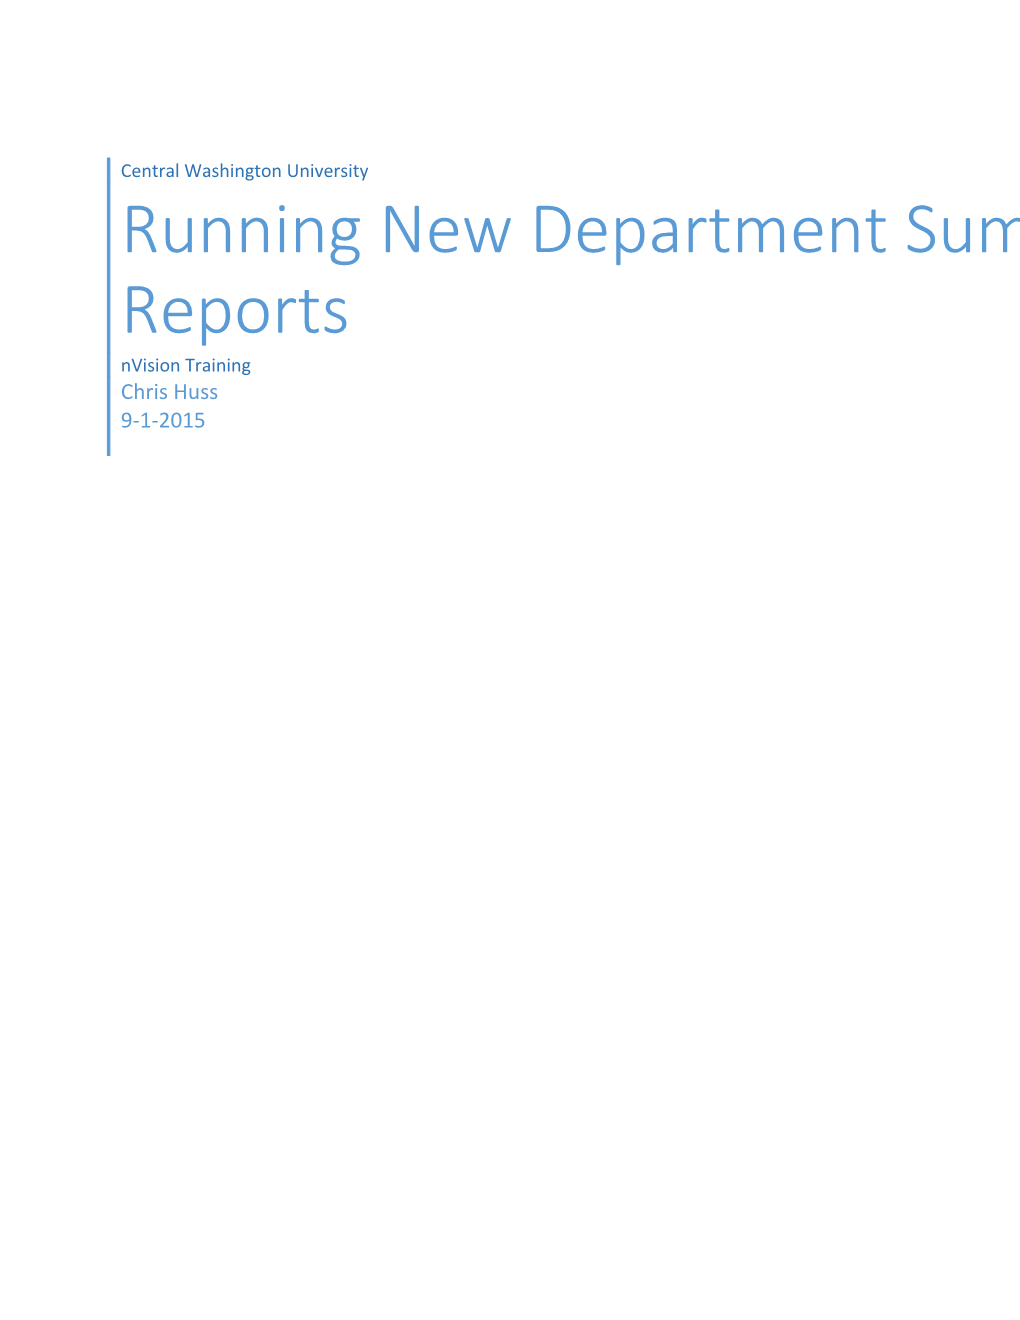 Running New Department Summary Reports